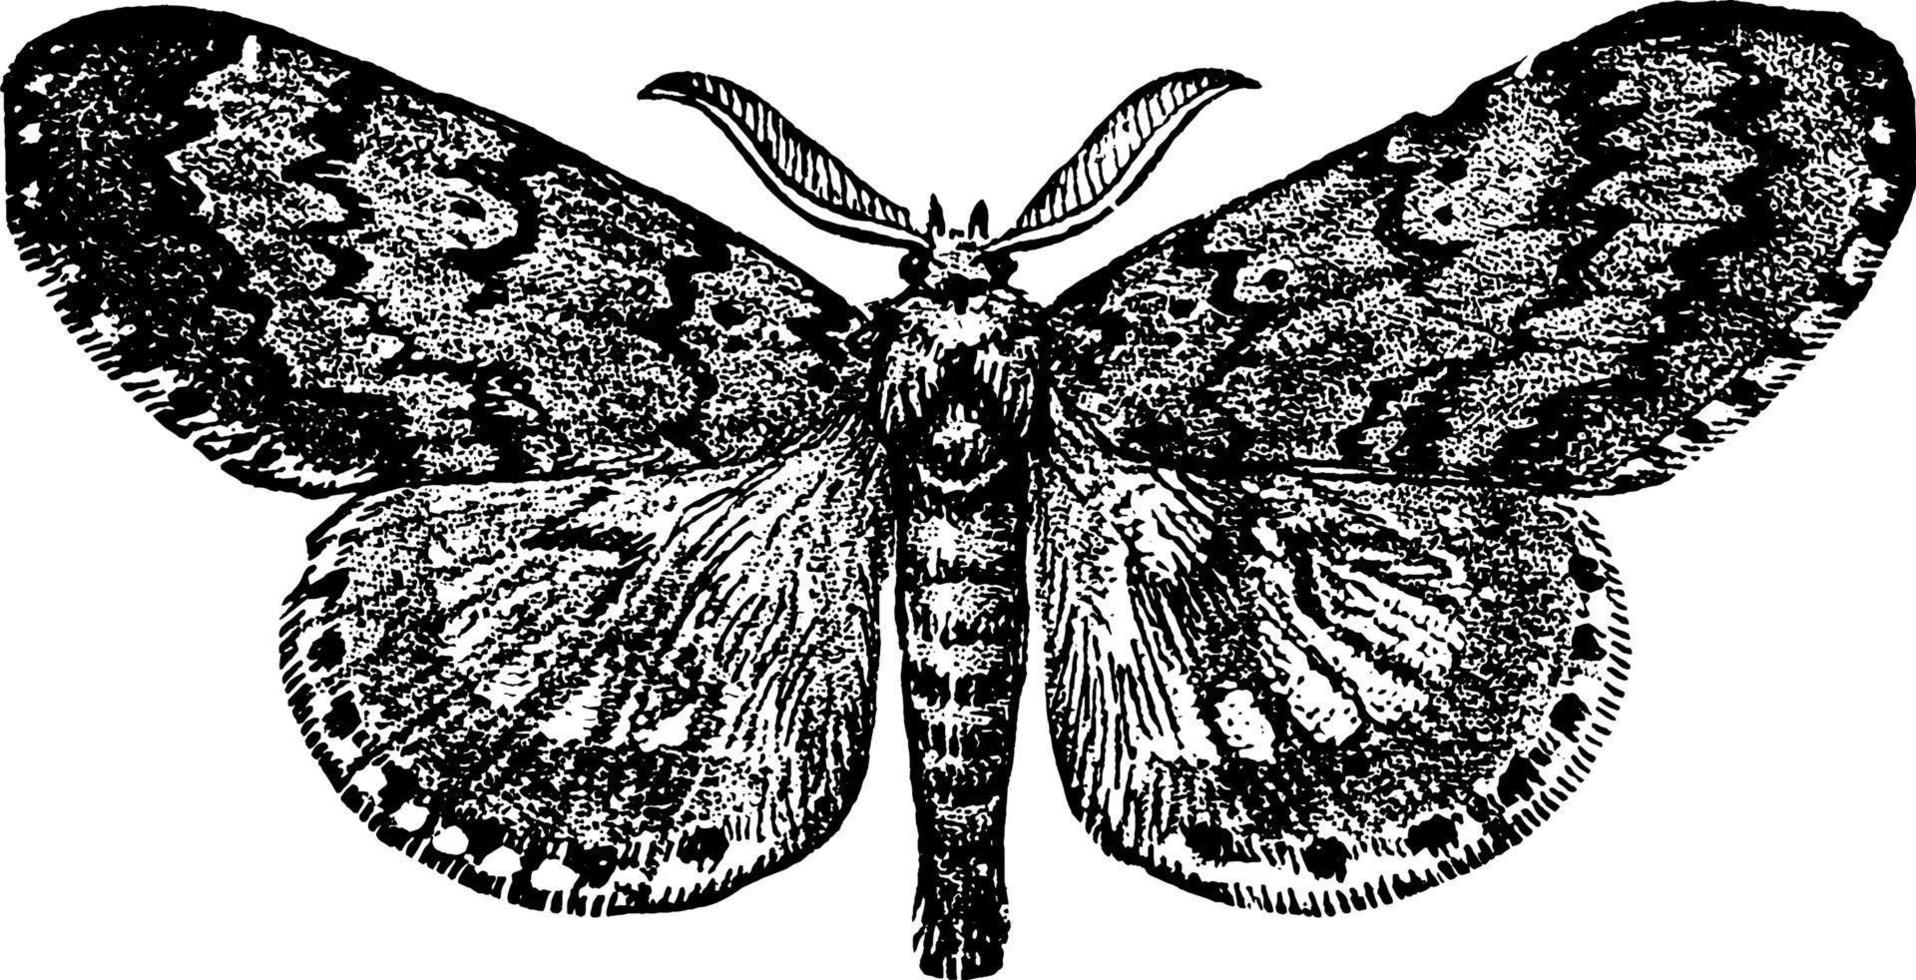 macho de mariposa cigana, ilustração vintage. vetor